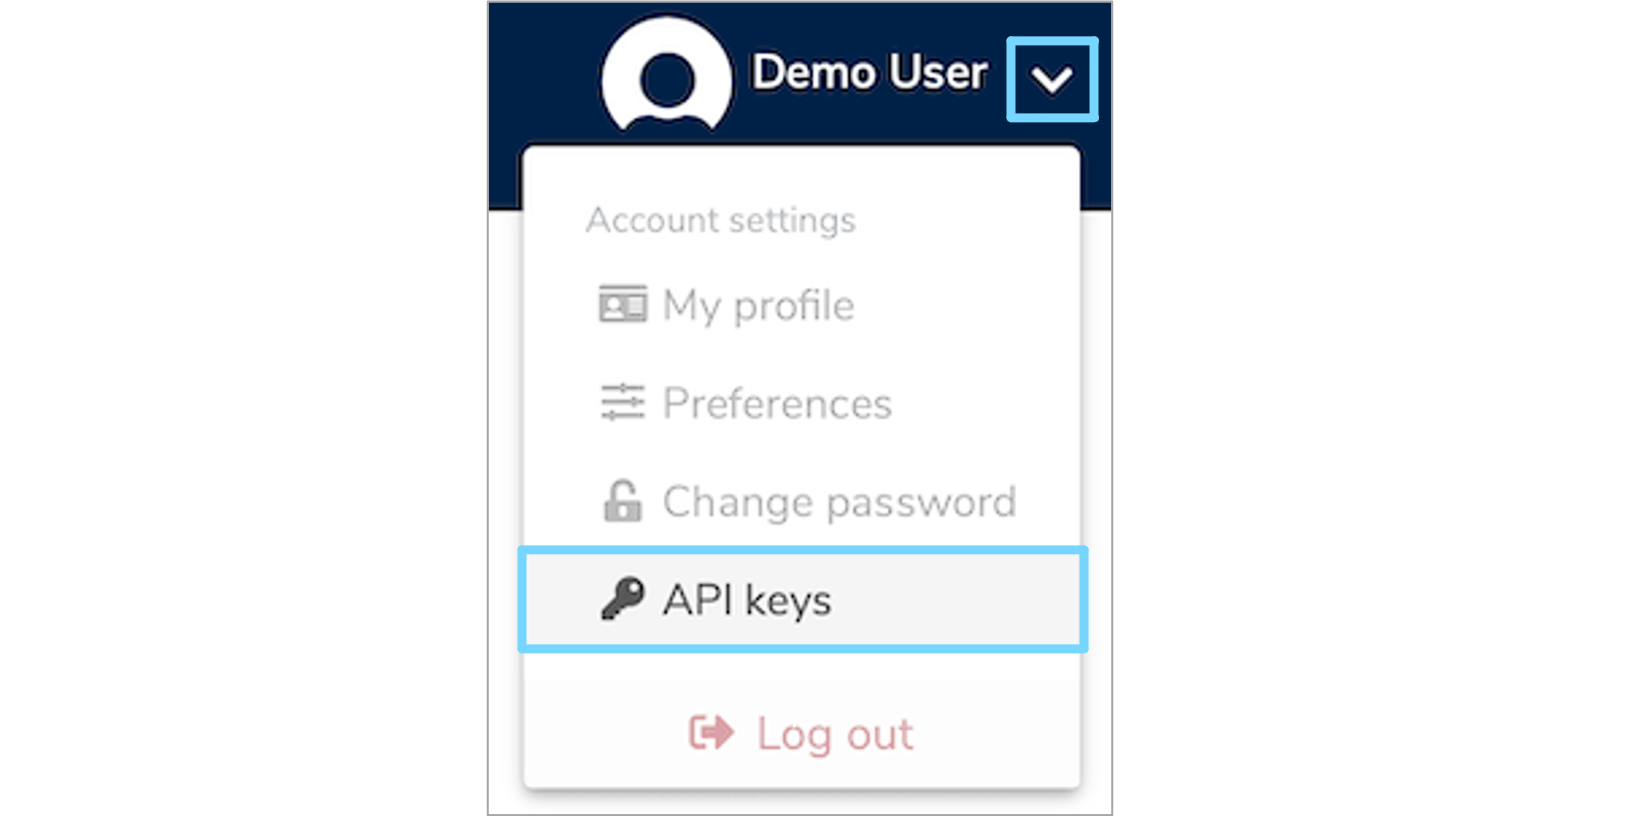 API keys menu item in the User dropdown list